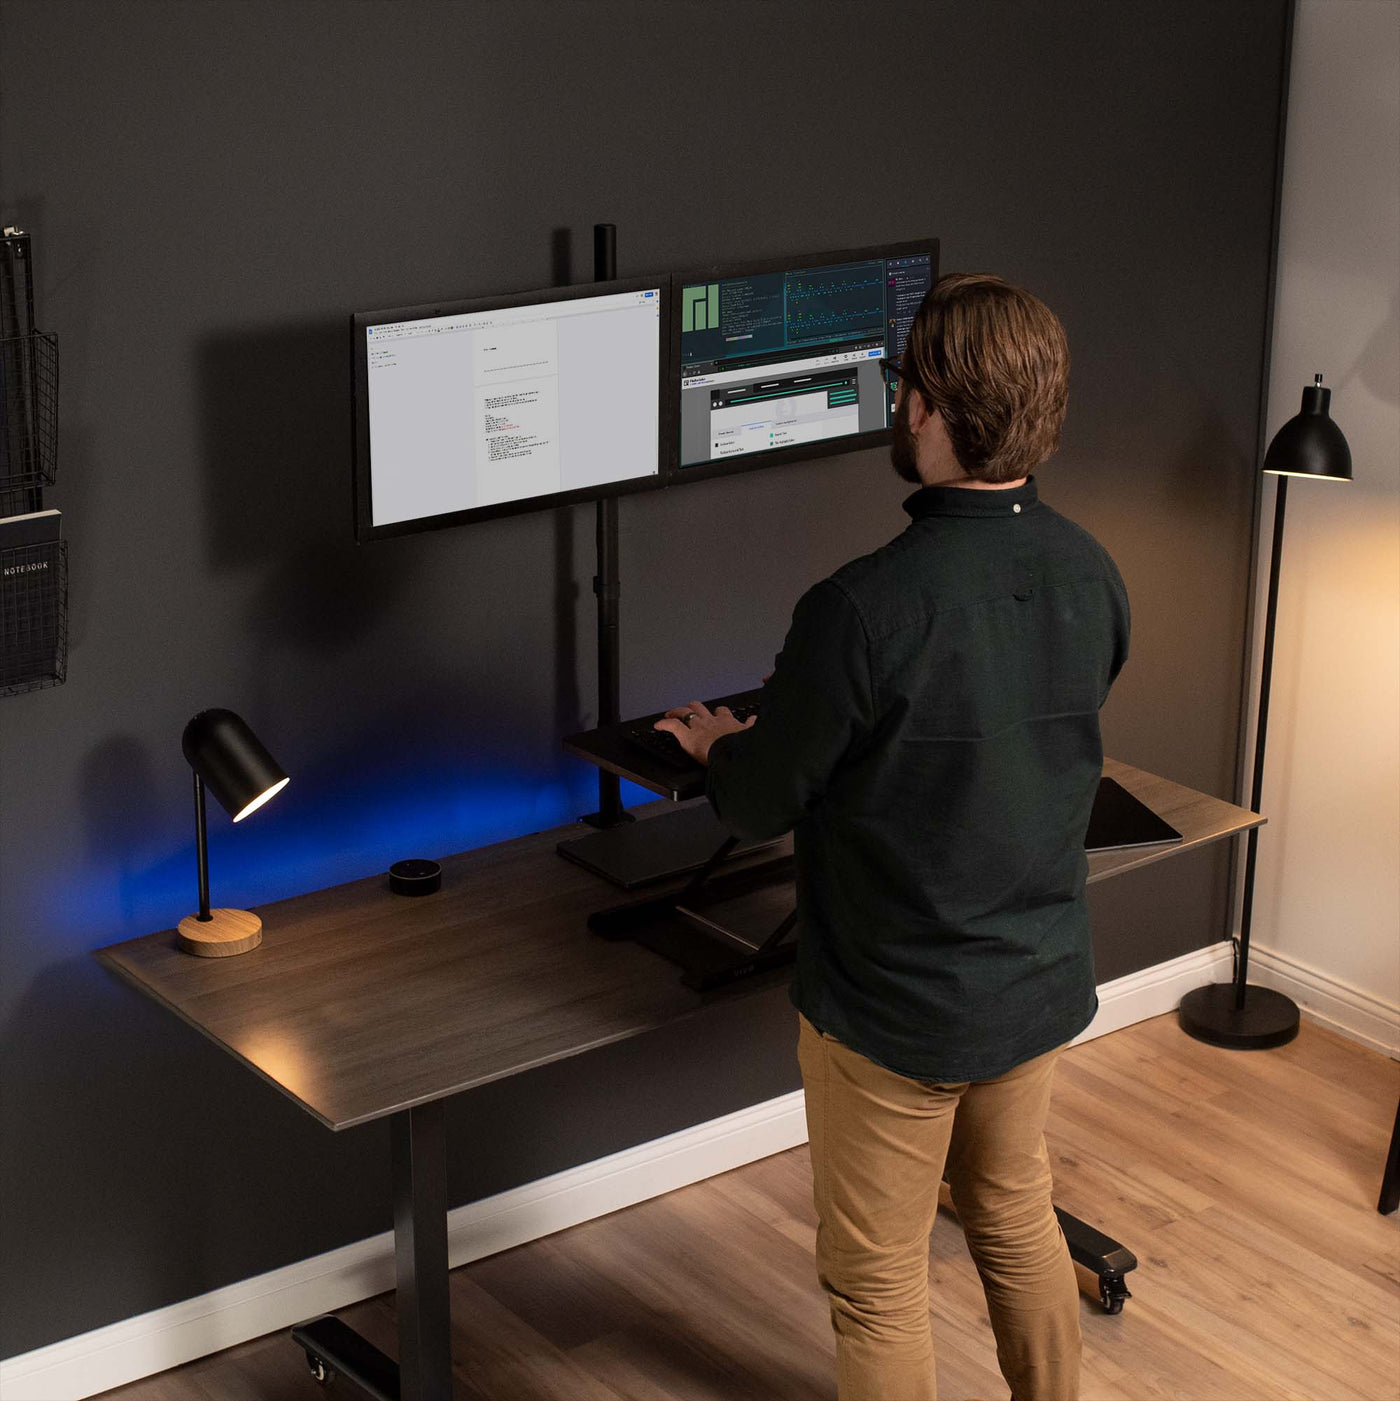 Sturdy dual monitor extra tall desk mount.